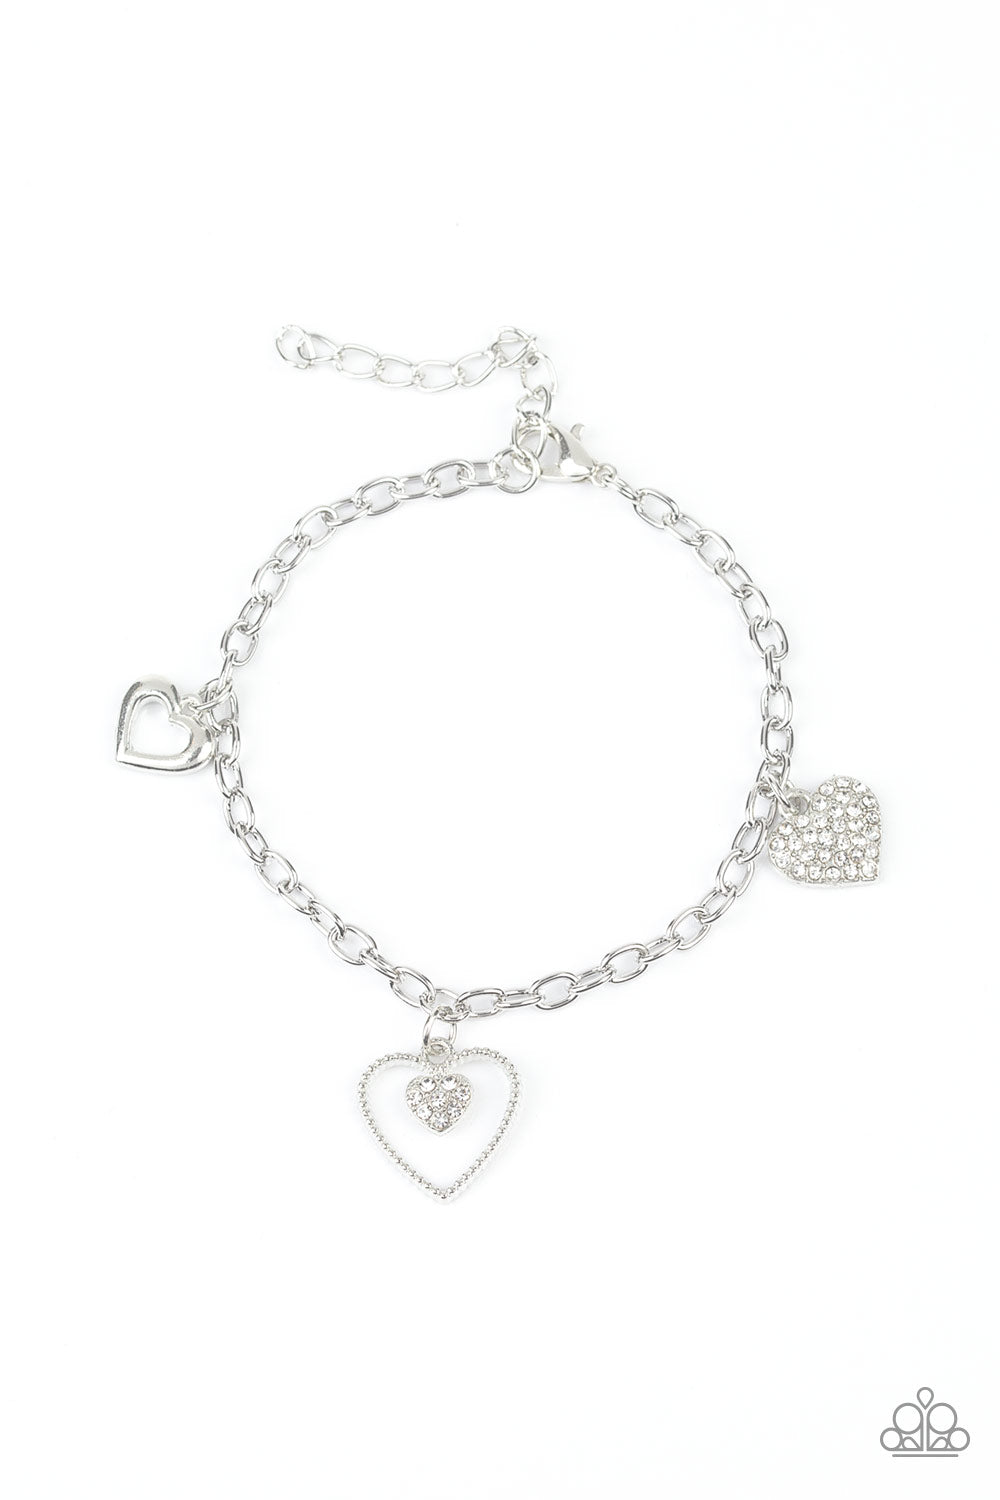 Hearts and Harps - White rhinestones bracelet